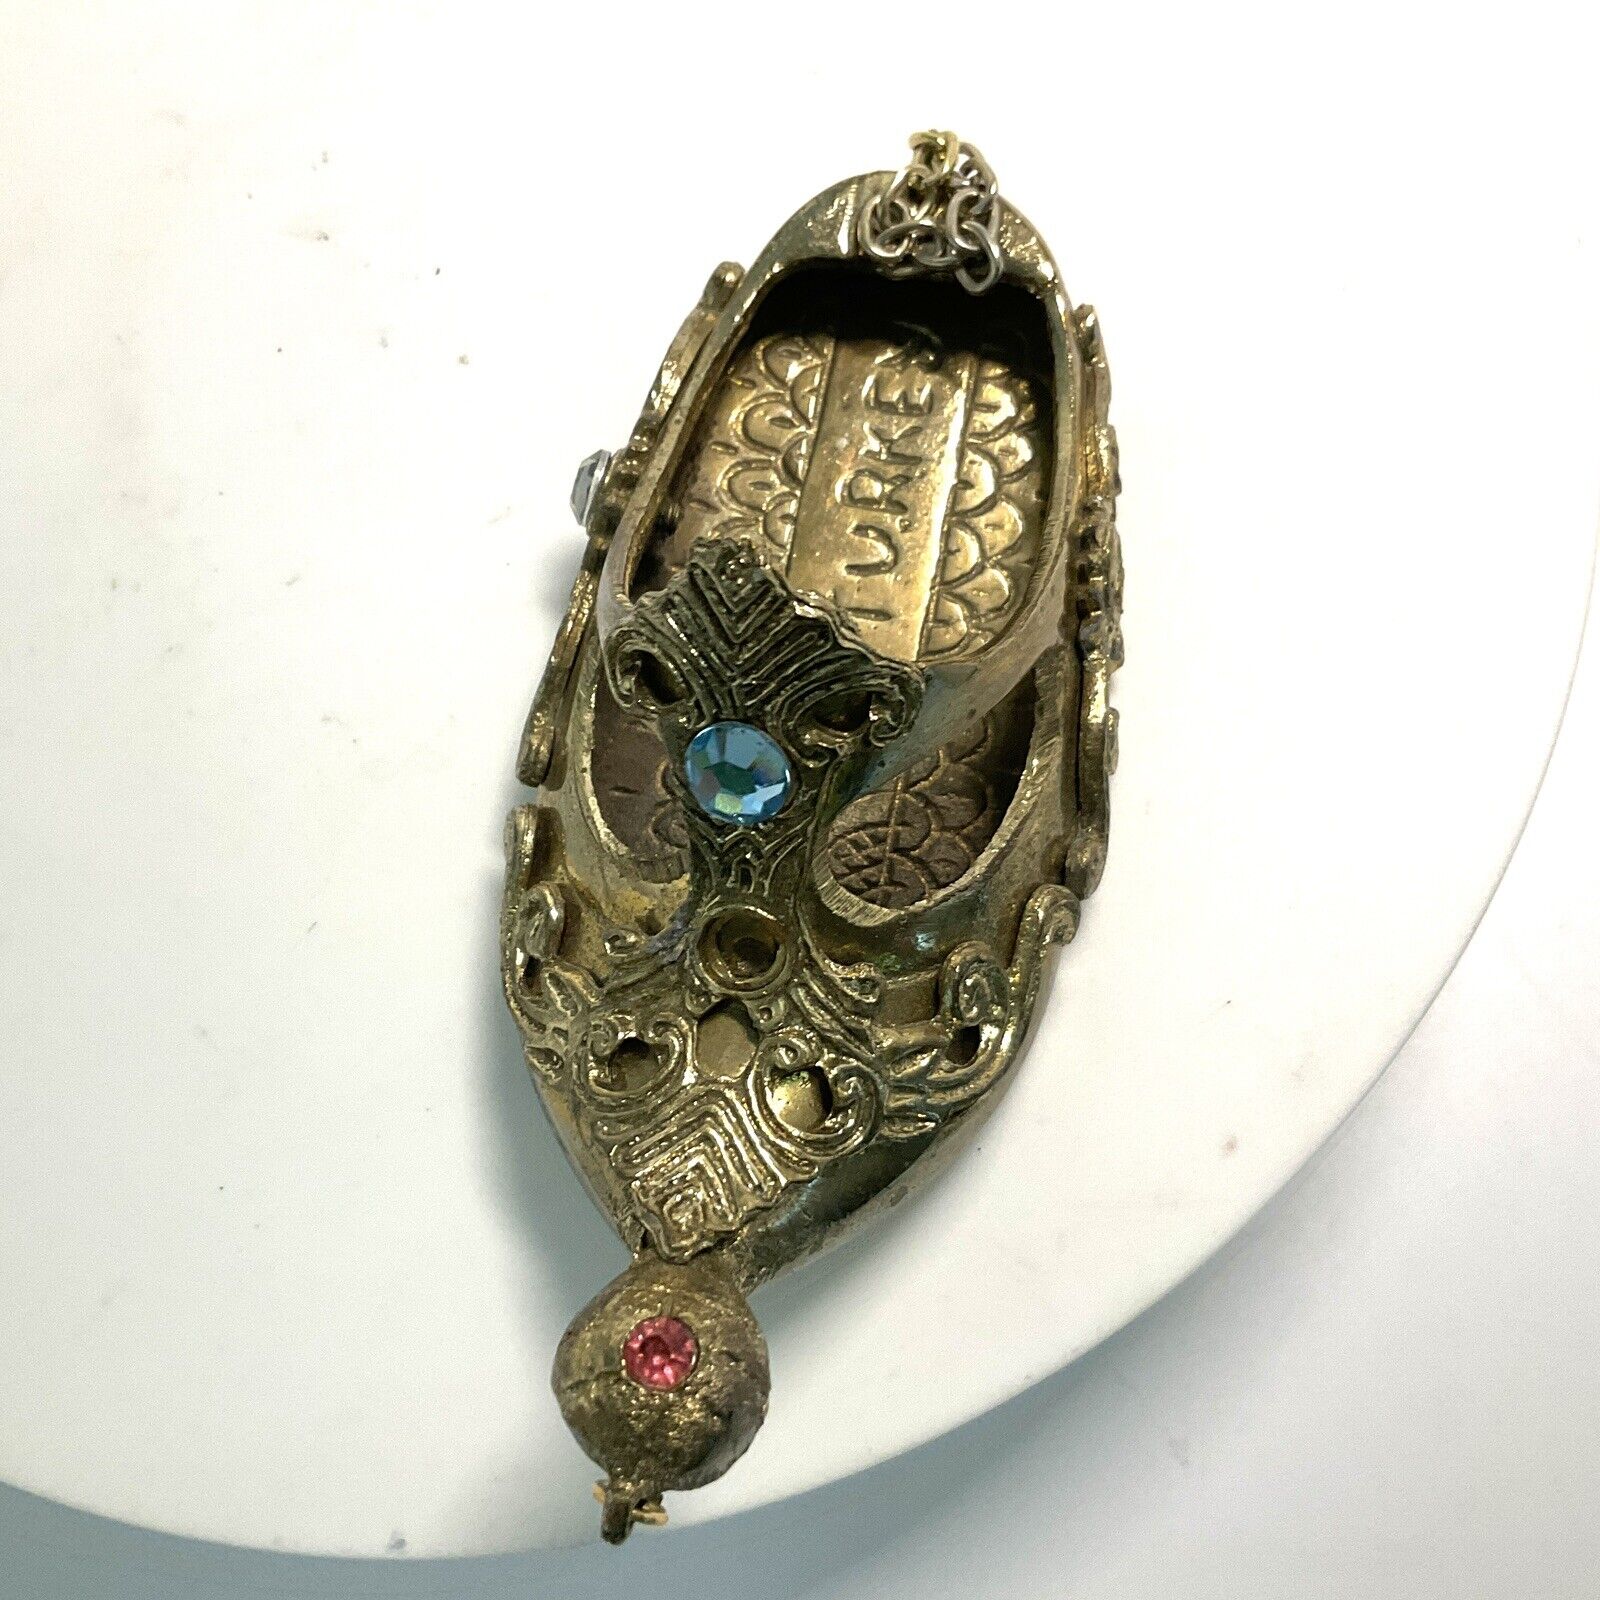 Vintage Small Brass Shoe Ashtray Turkish Slipper Cigarette Holder Missing Stones